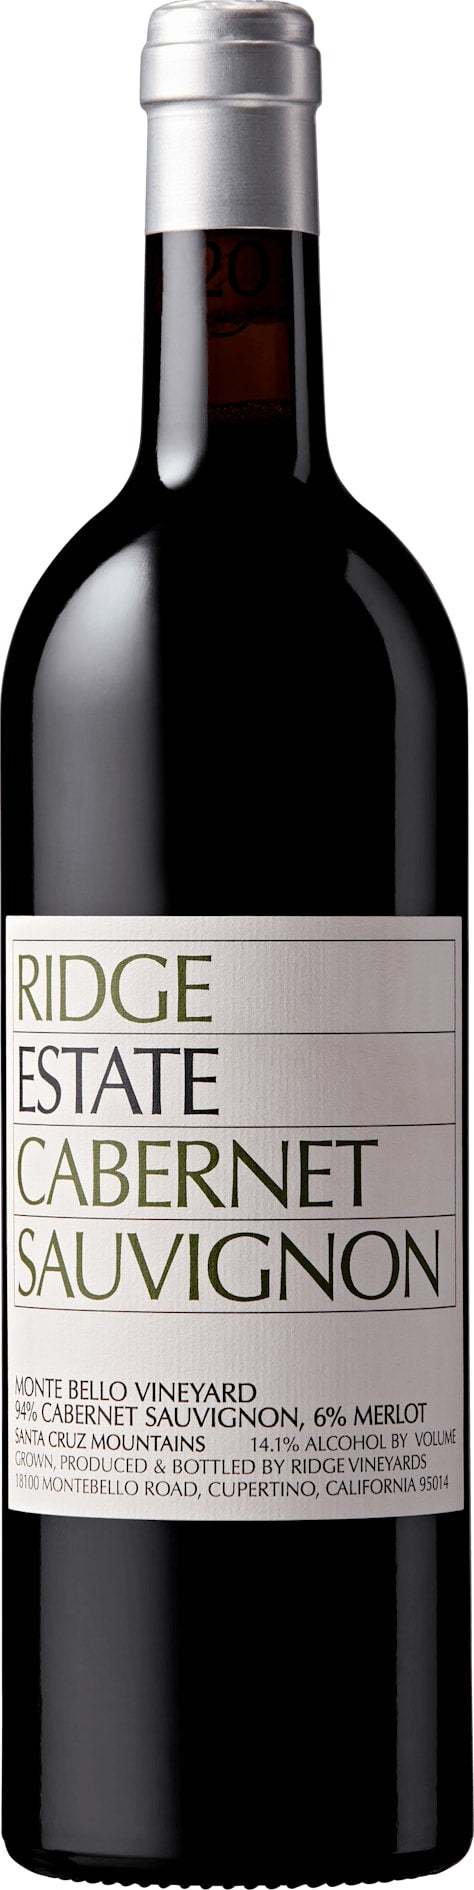 Ridge Estate Cabernet Sauvignon Magnum 2019 150cl - Buy Ridge Wines from GREAT WINES DIRECT wine shop